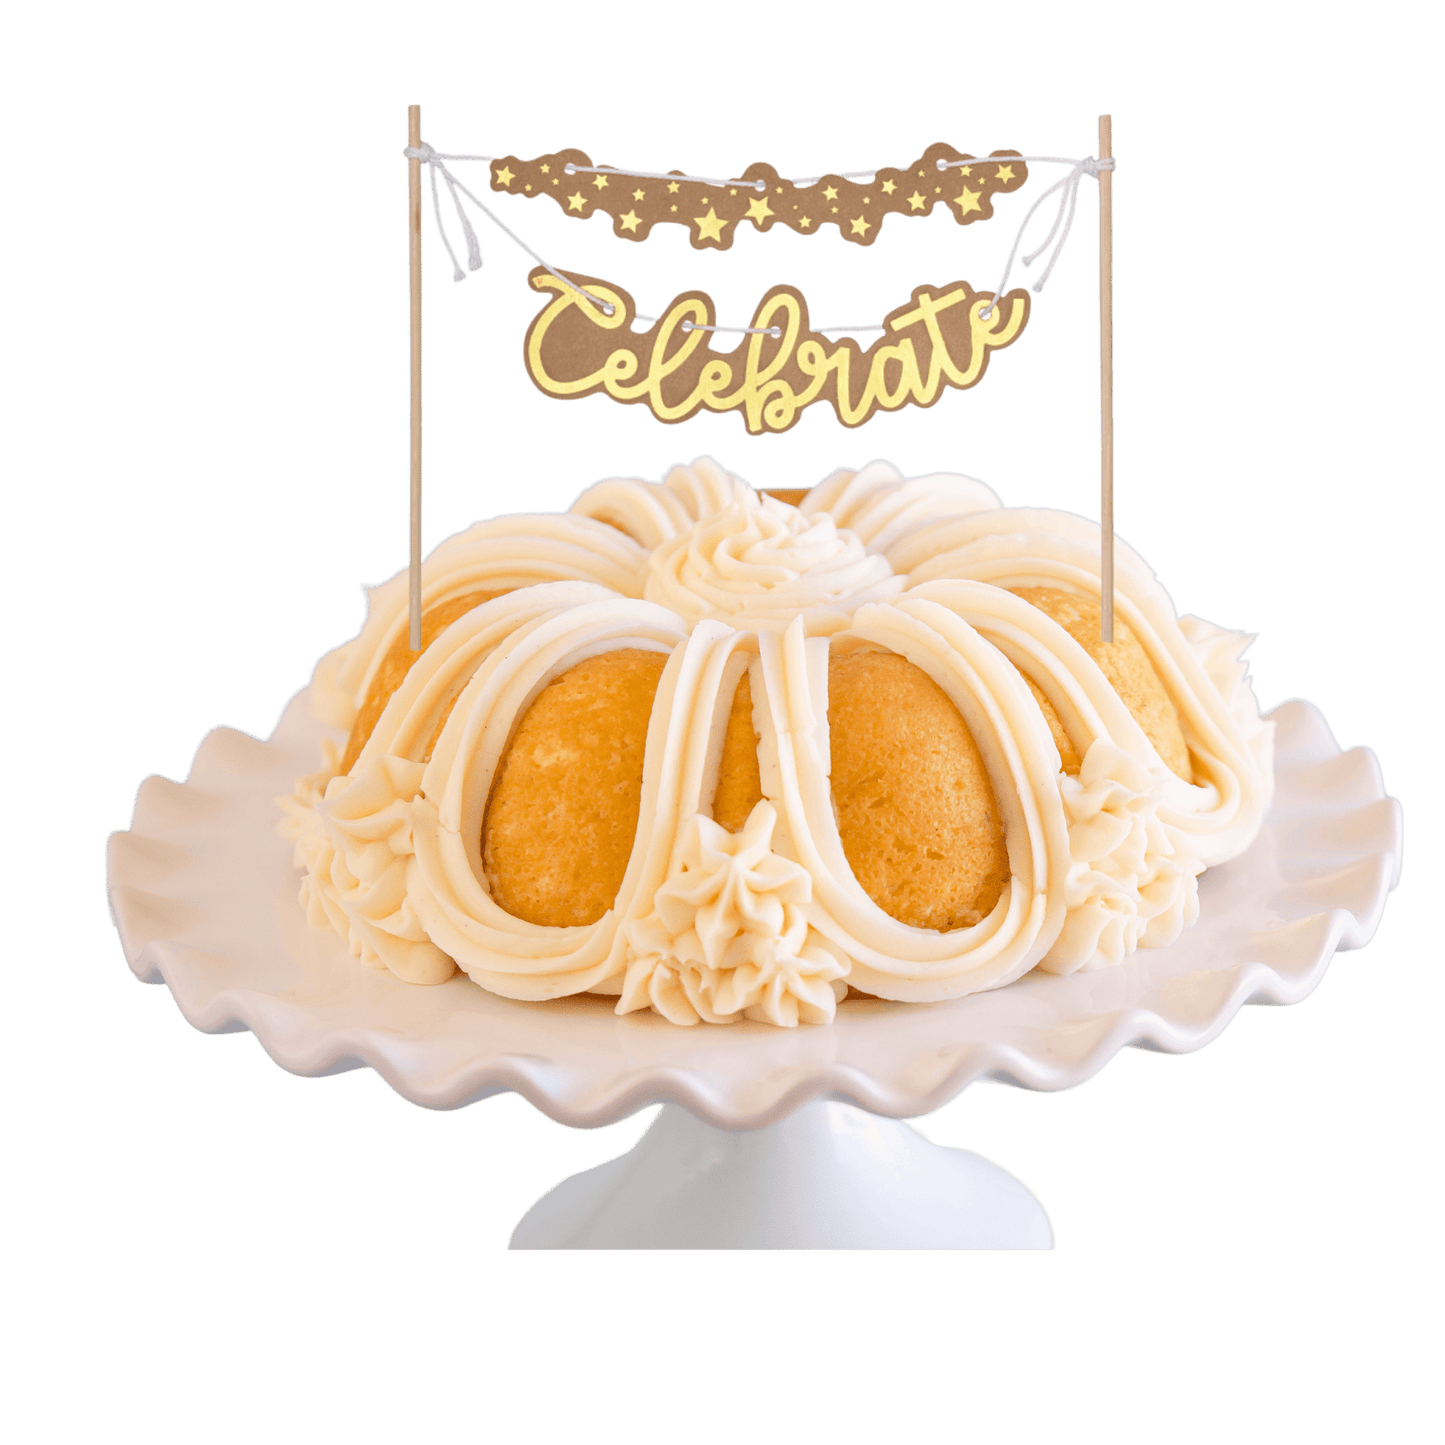 Vanilla Bean "CELEBRATE" Banner Bundt Cake - Wholesale Supplies